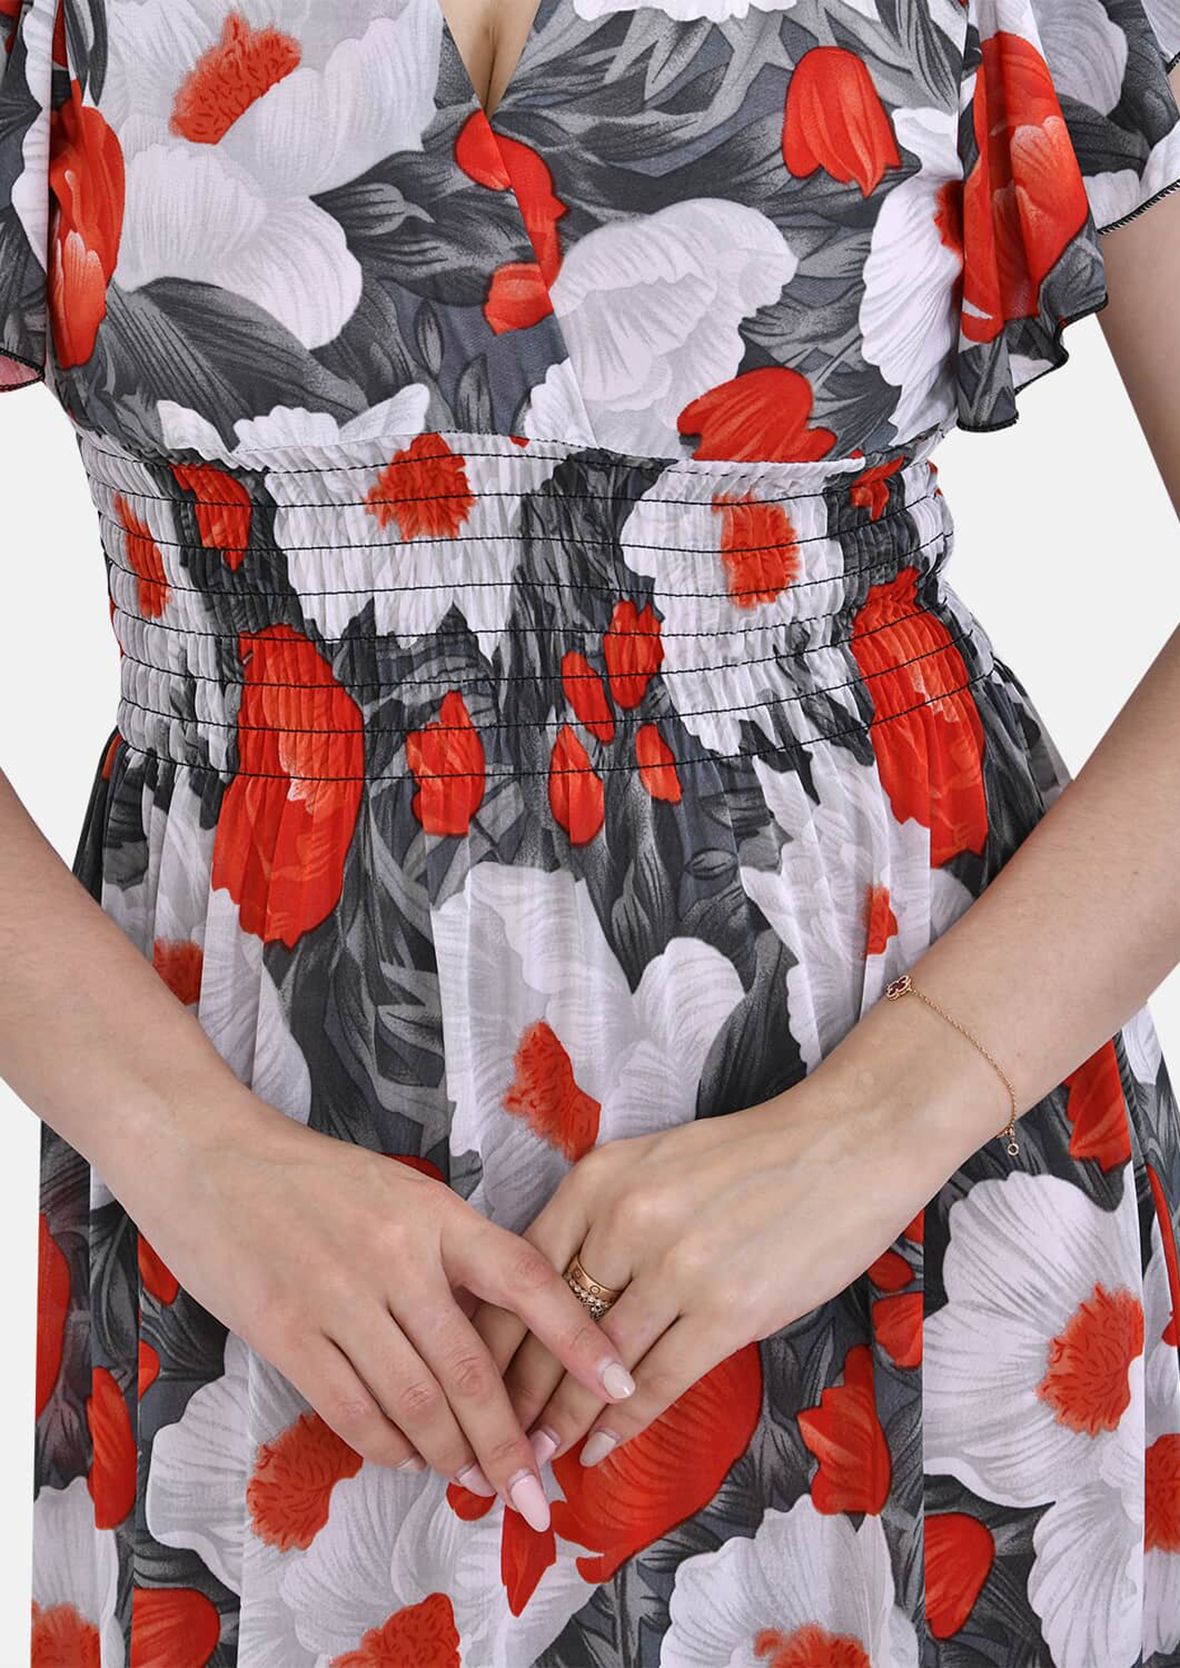 Smocked Waist Midi Dress with Sleeves